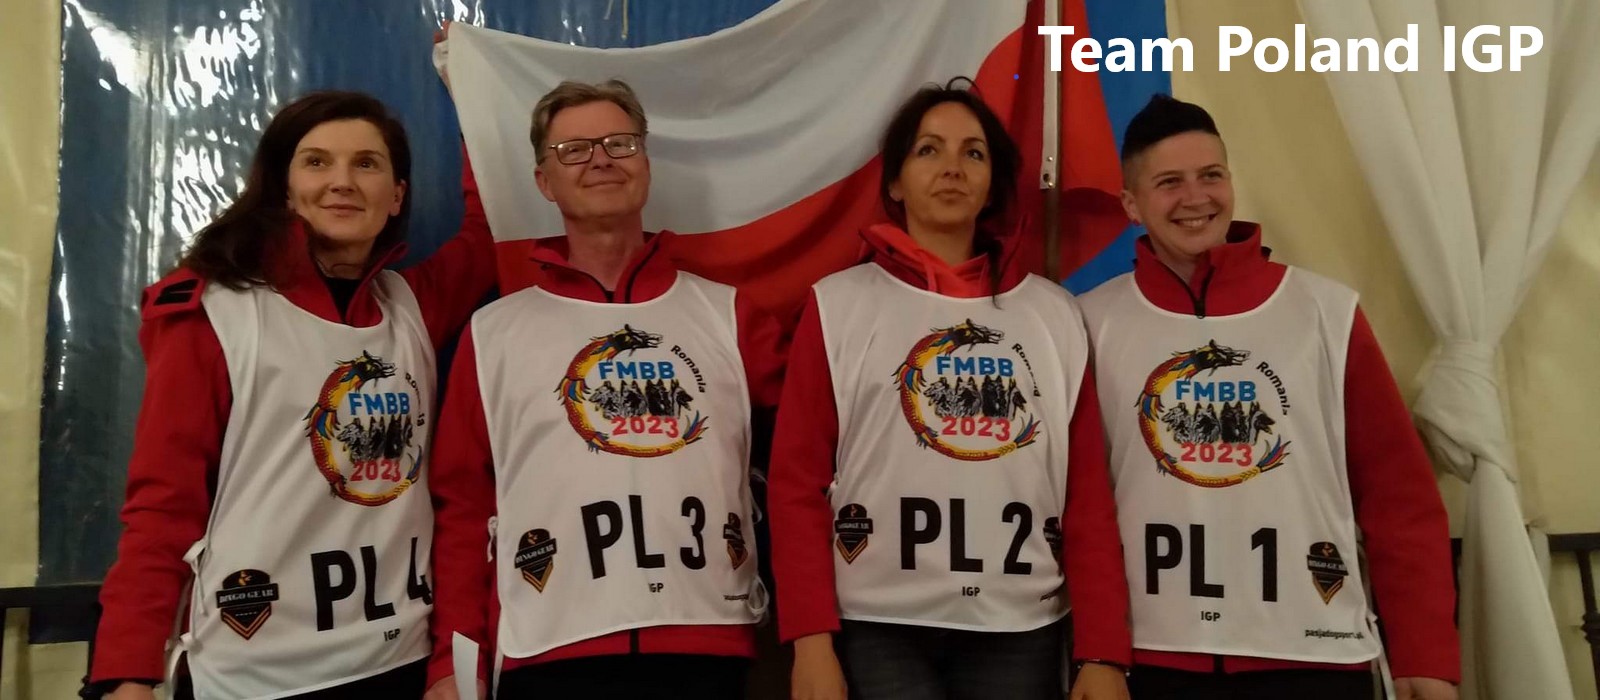 Zobacz Team Poland IGP na FMBB 2023